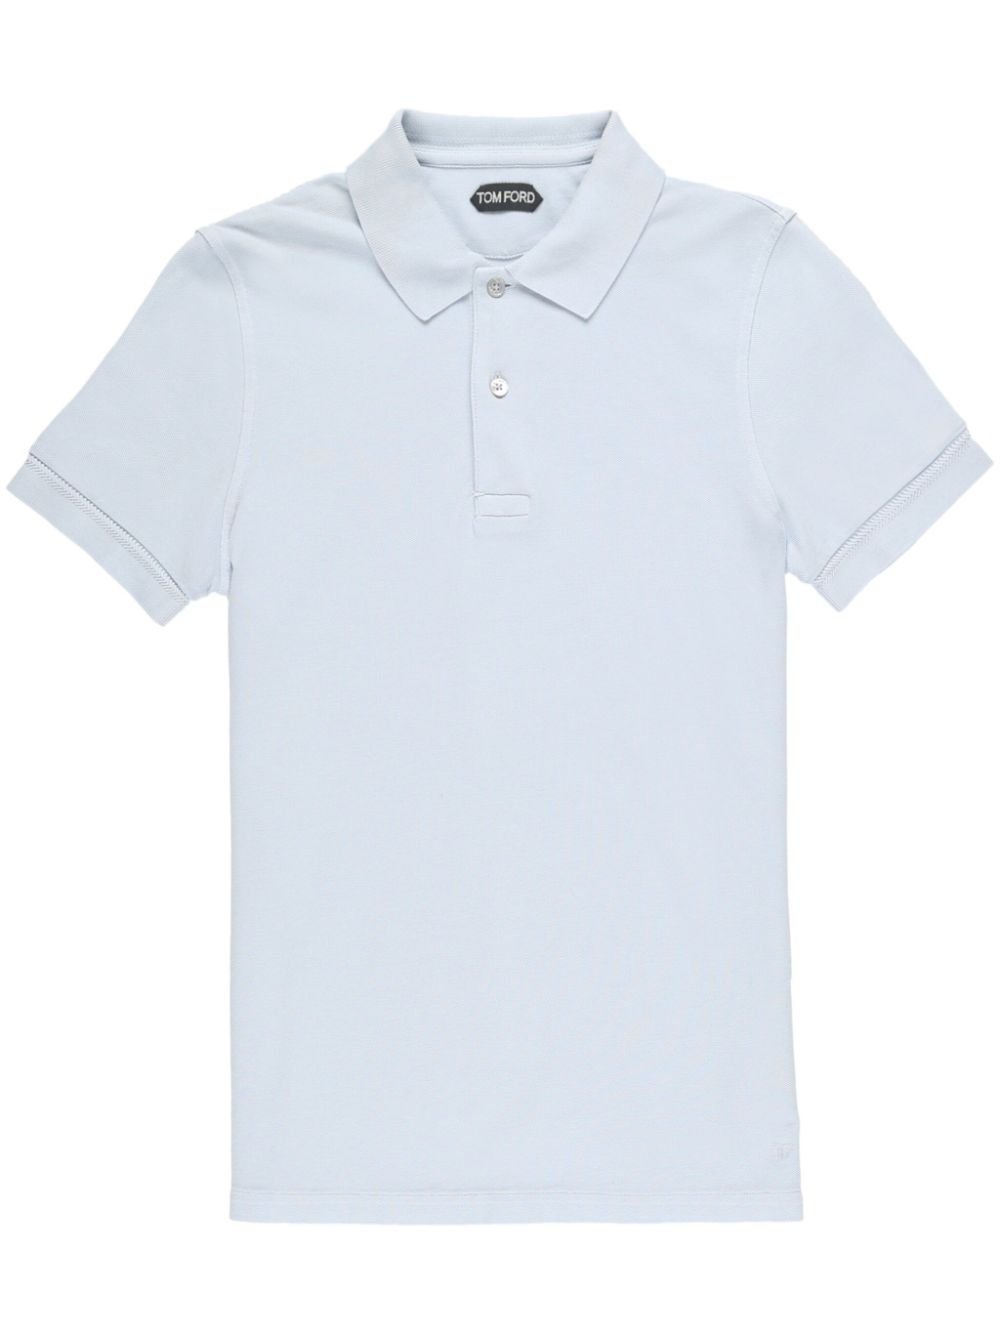 TOM FORD short-sleeve Cotton Polo Shirt - Farfetch